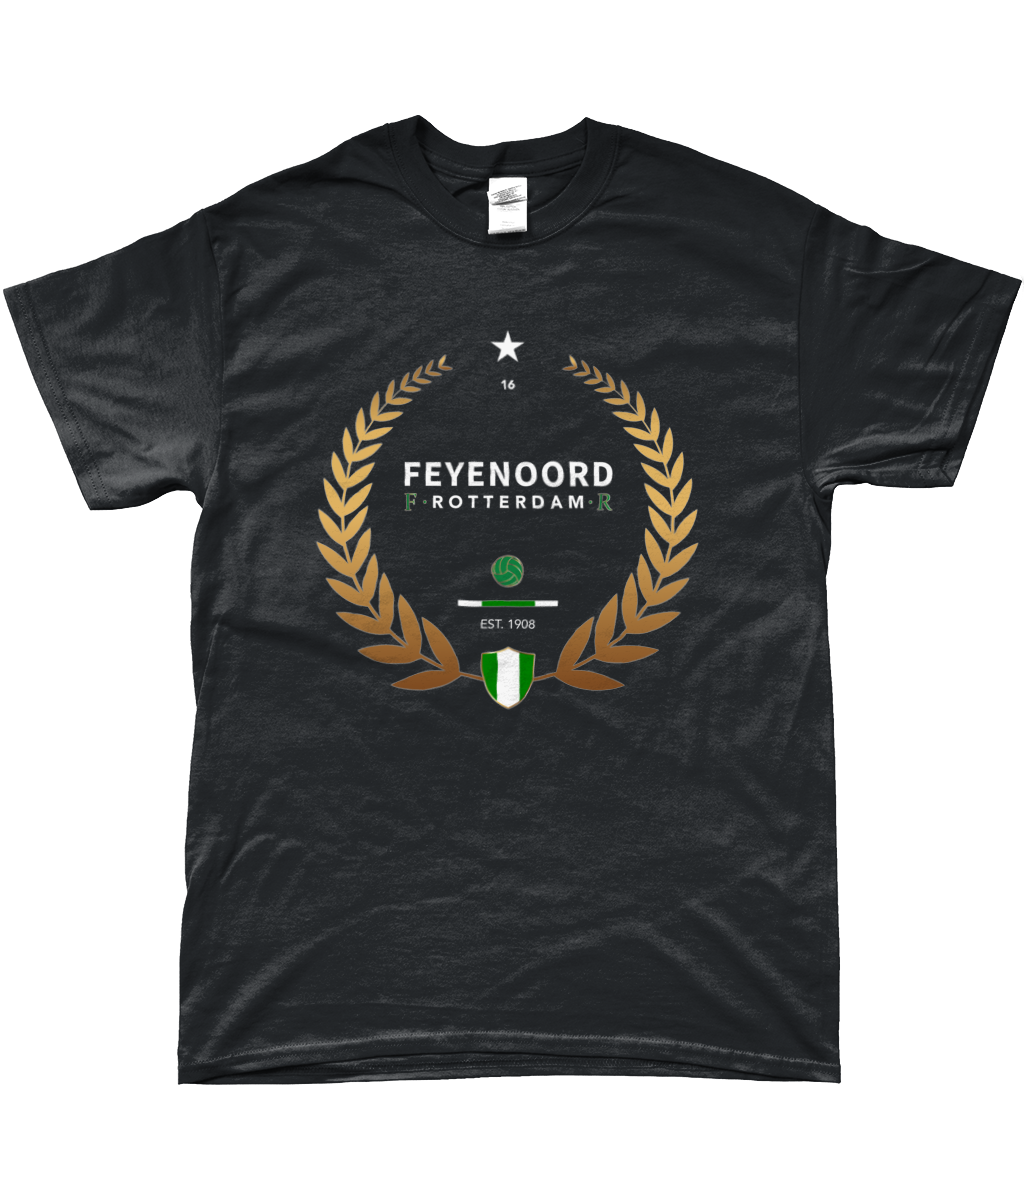 Feyenoord - Gouden Krans T-Shirt